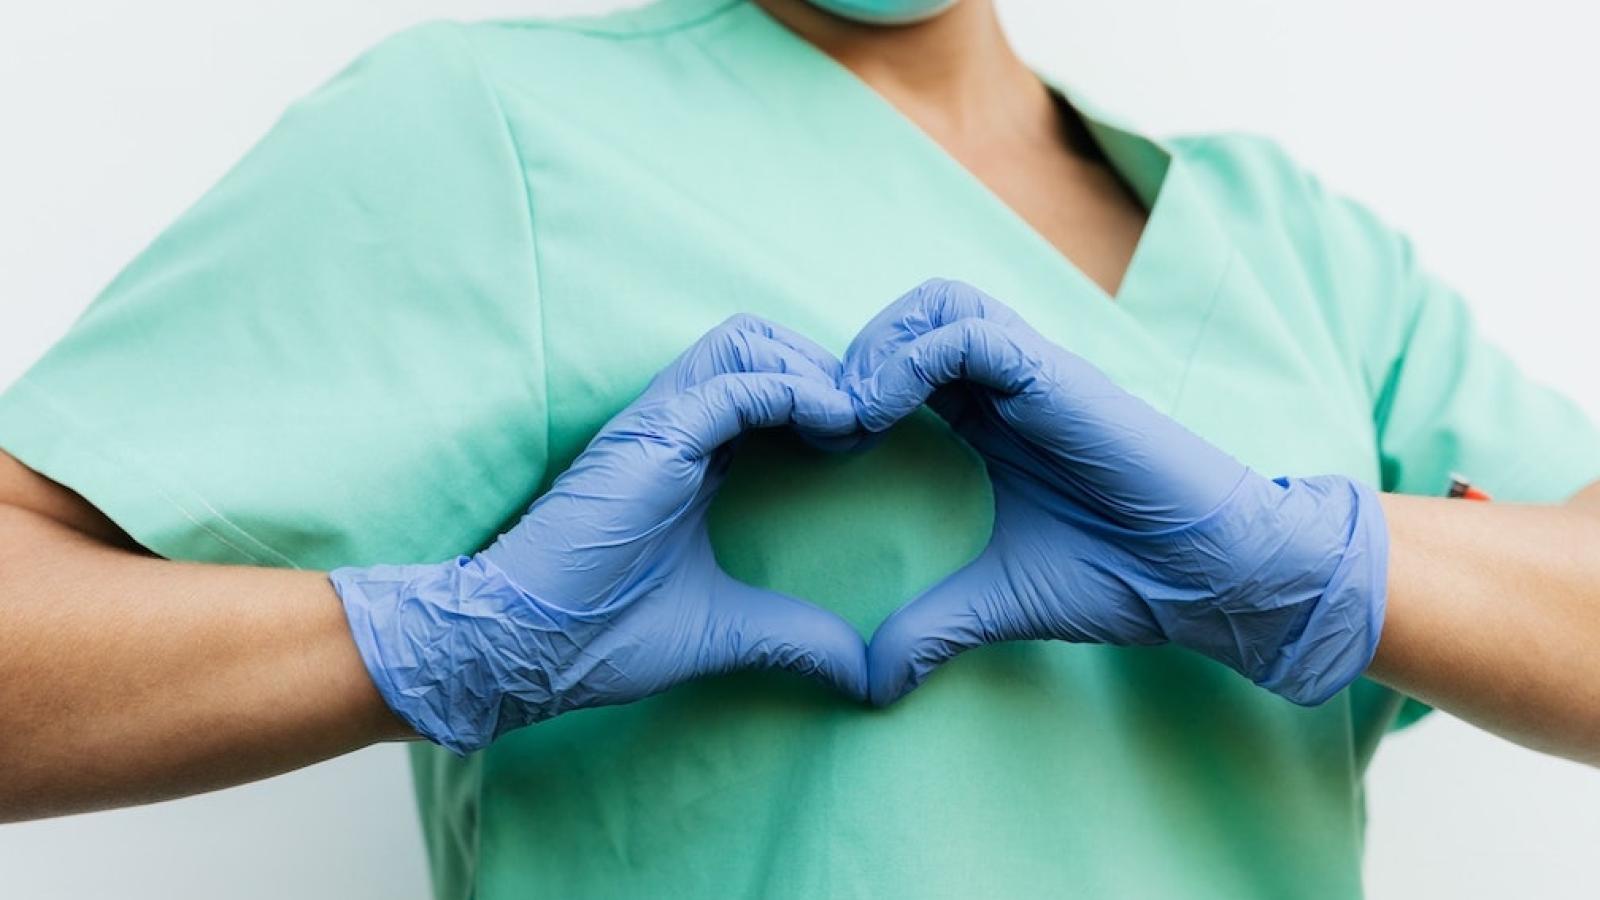 Nurse heart symbol